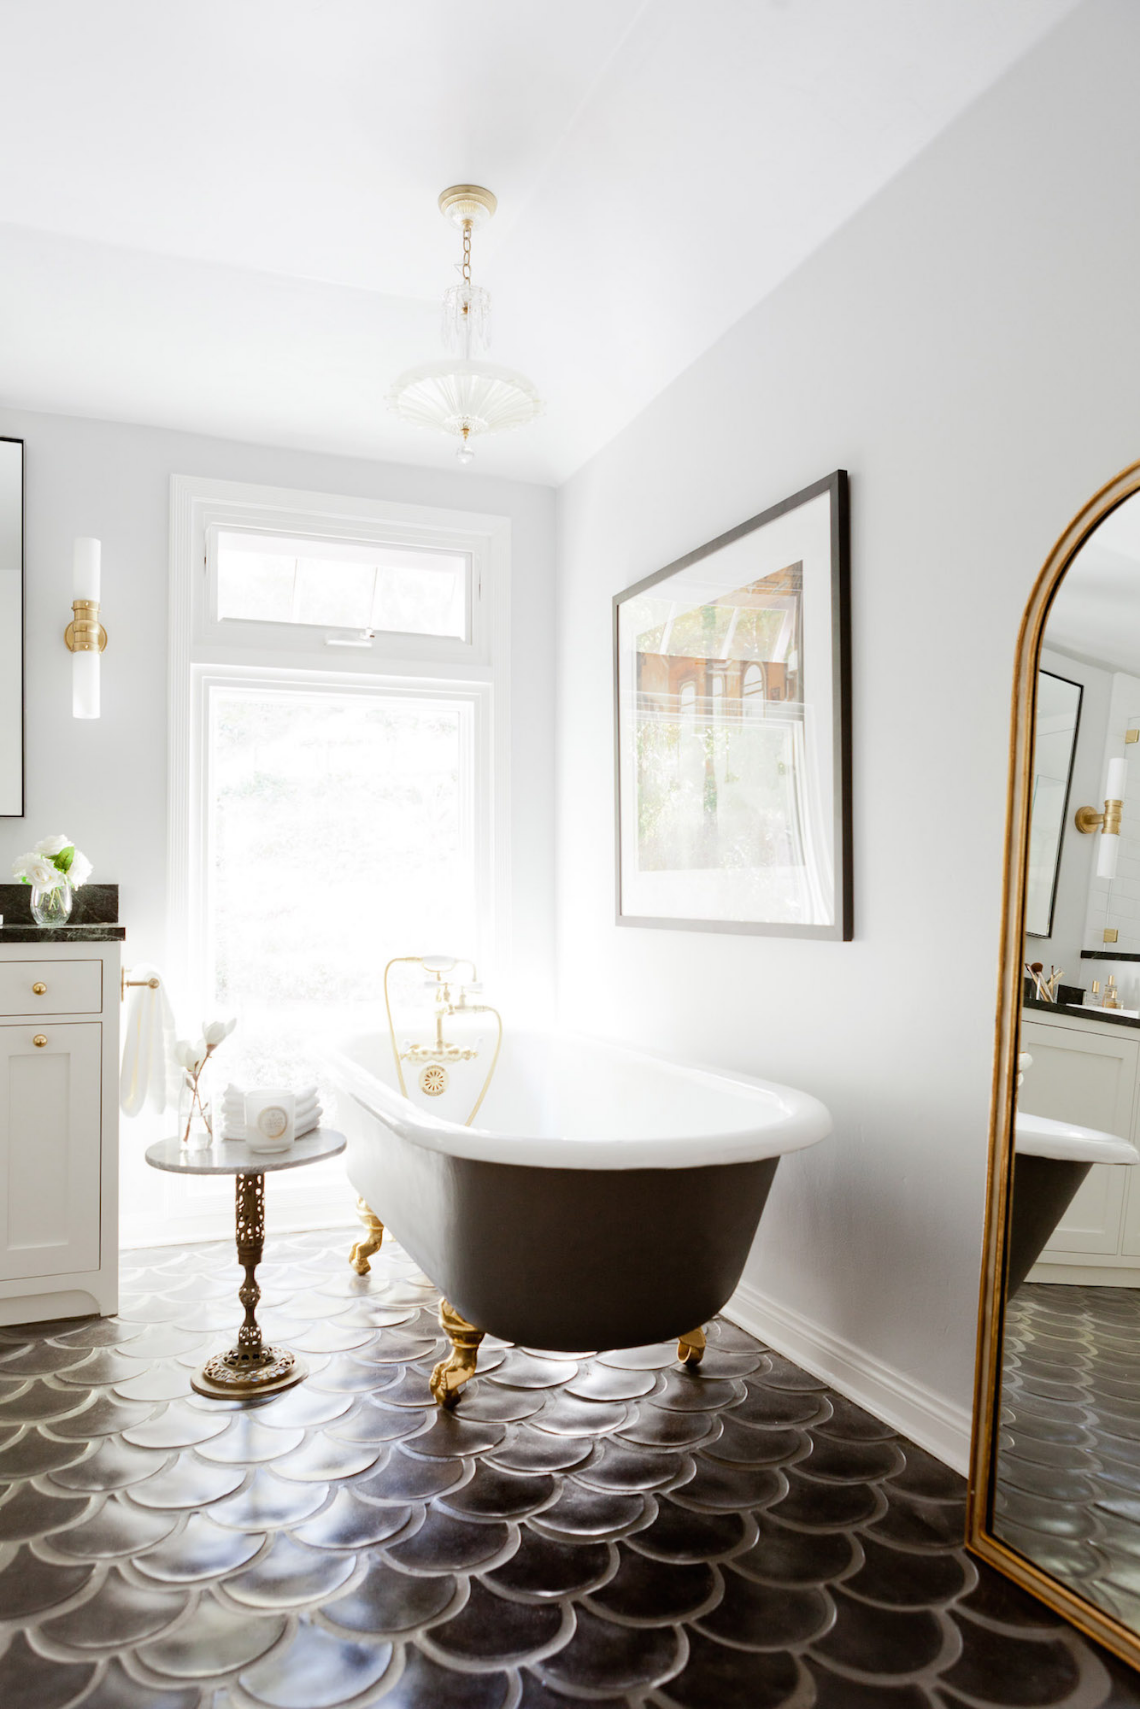 10 Bathroom Tile Trends For 2019